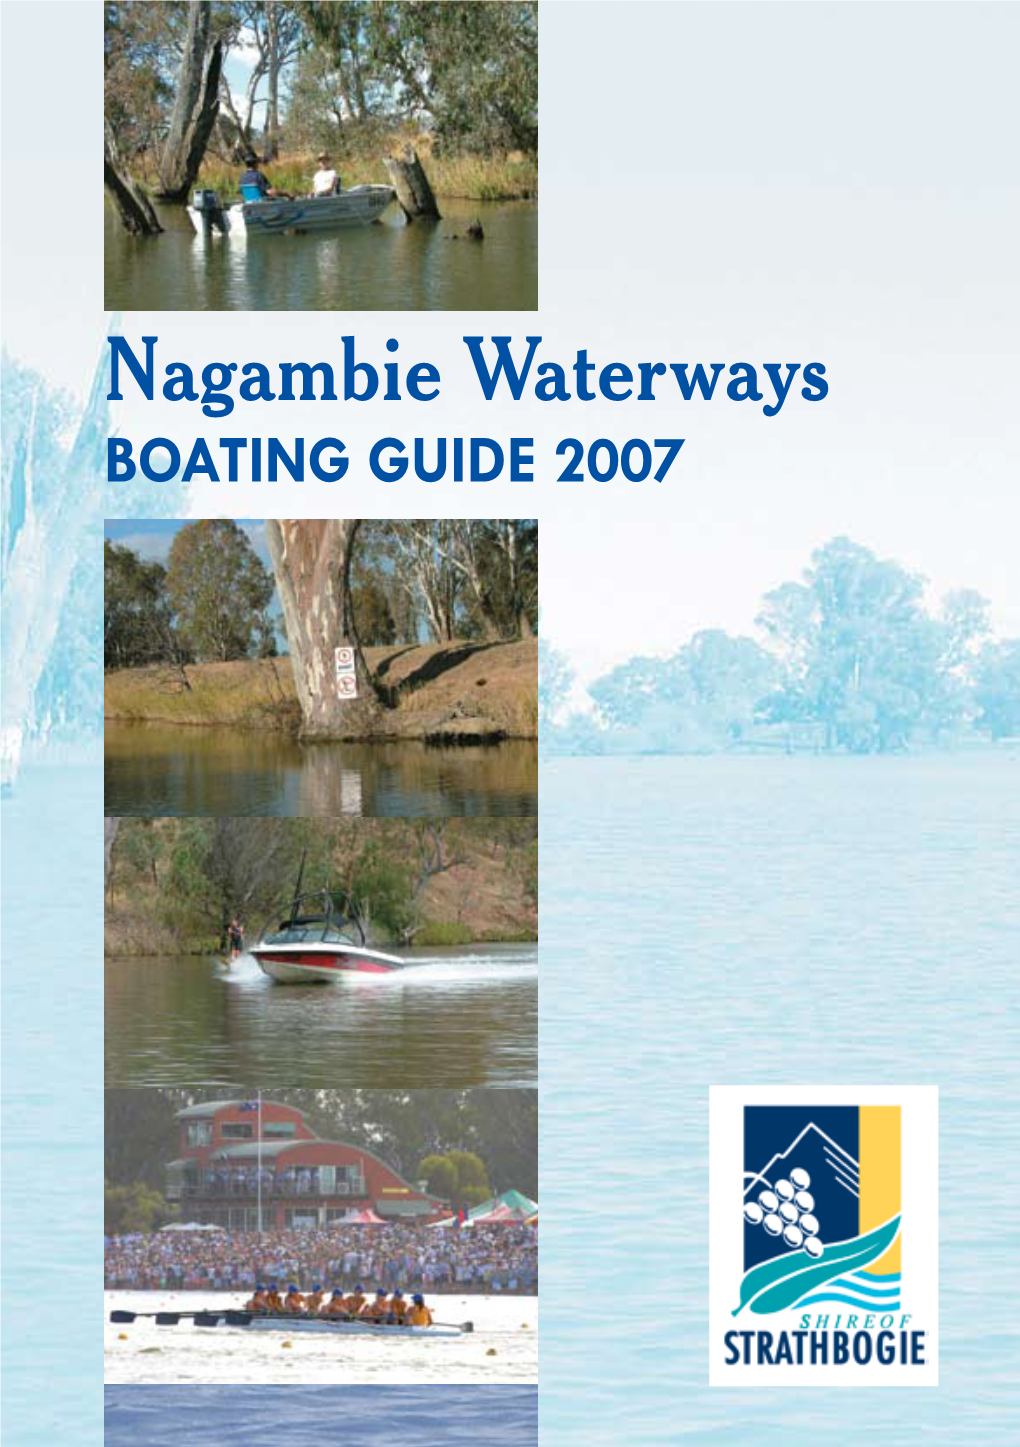 Nagambie Waterways Boating Guide 2007 Welcome